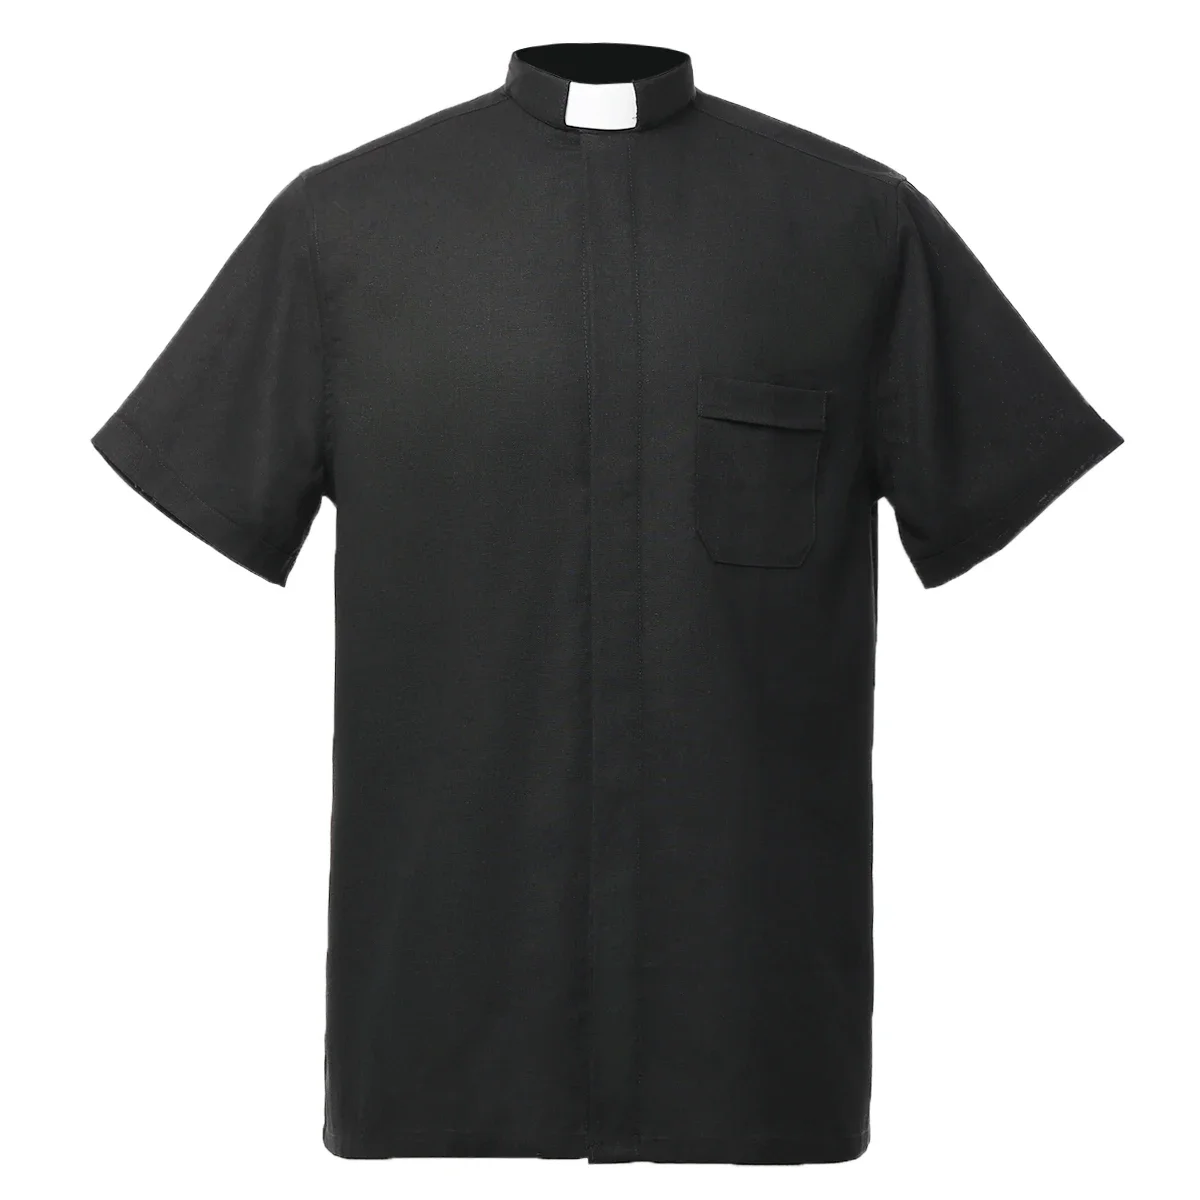 

Black Priest Shirt Catholic Church Adult Clergy Pastor Shirts Tops Tab Collar Choir Blouse